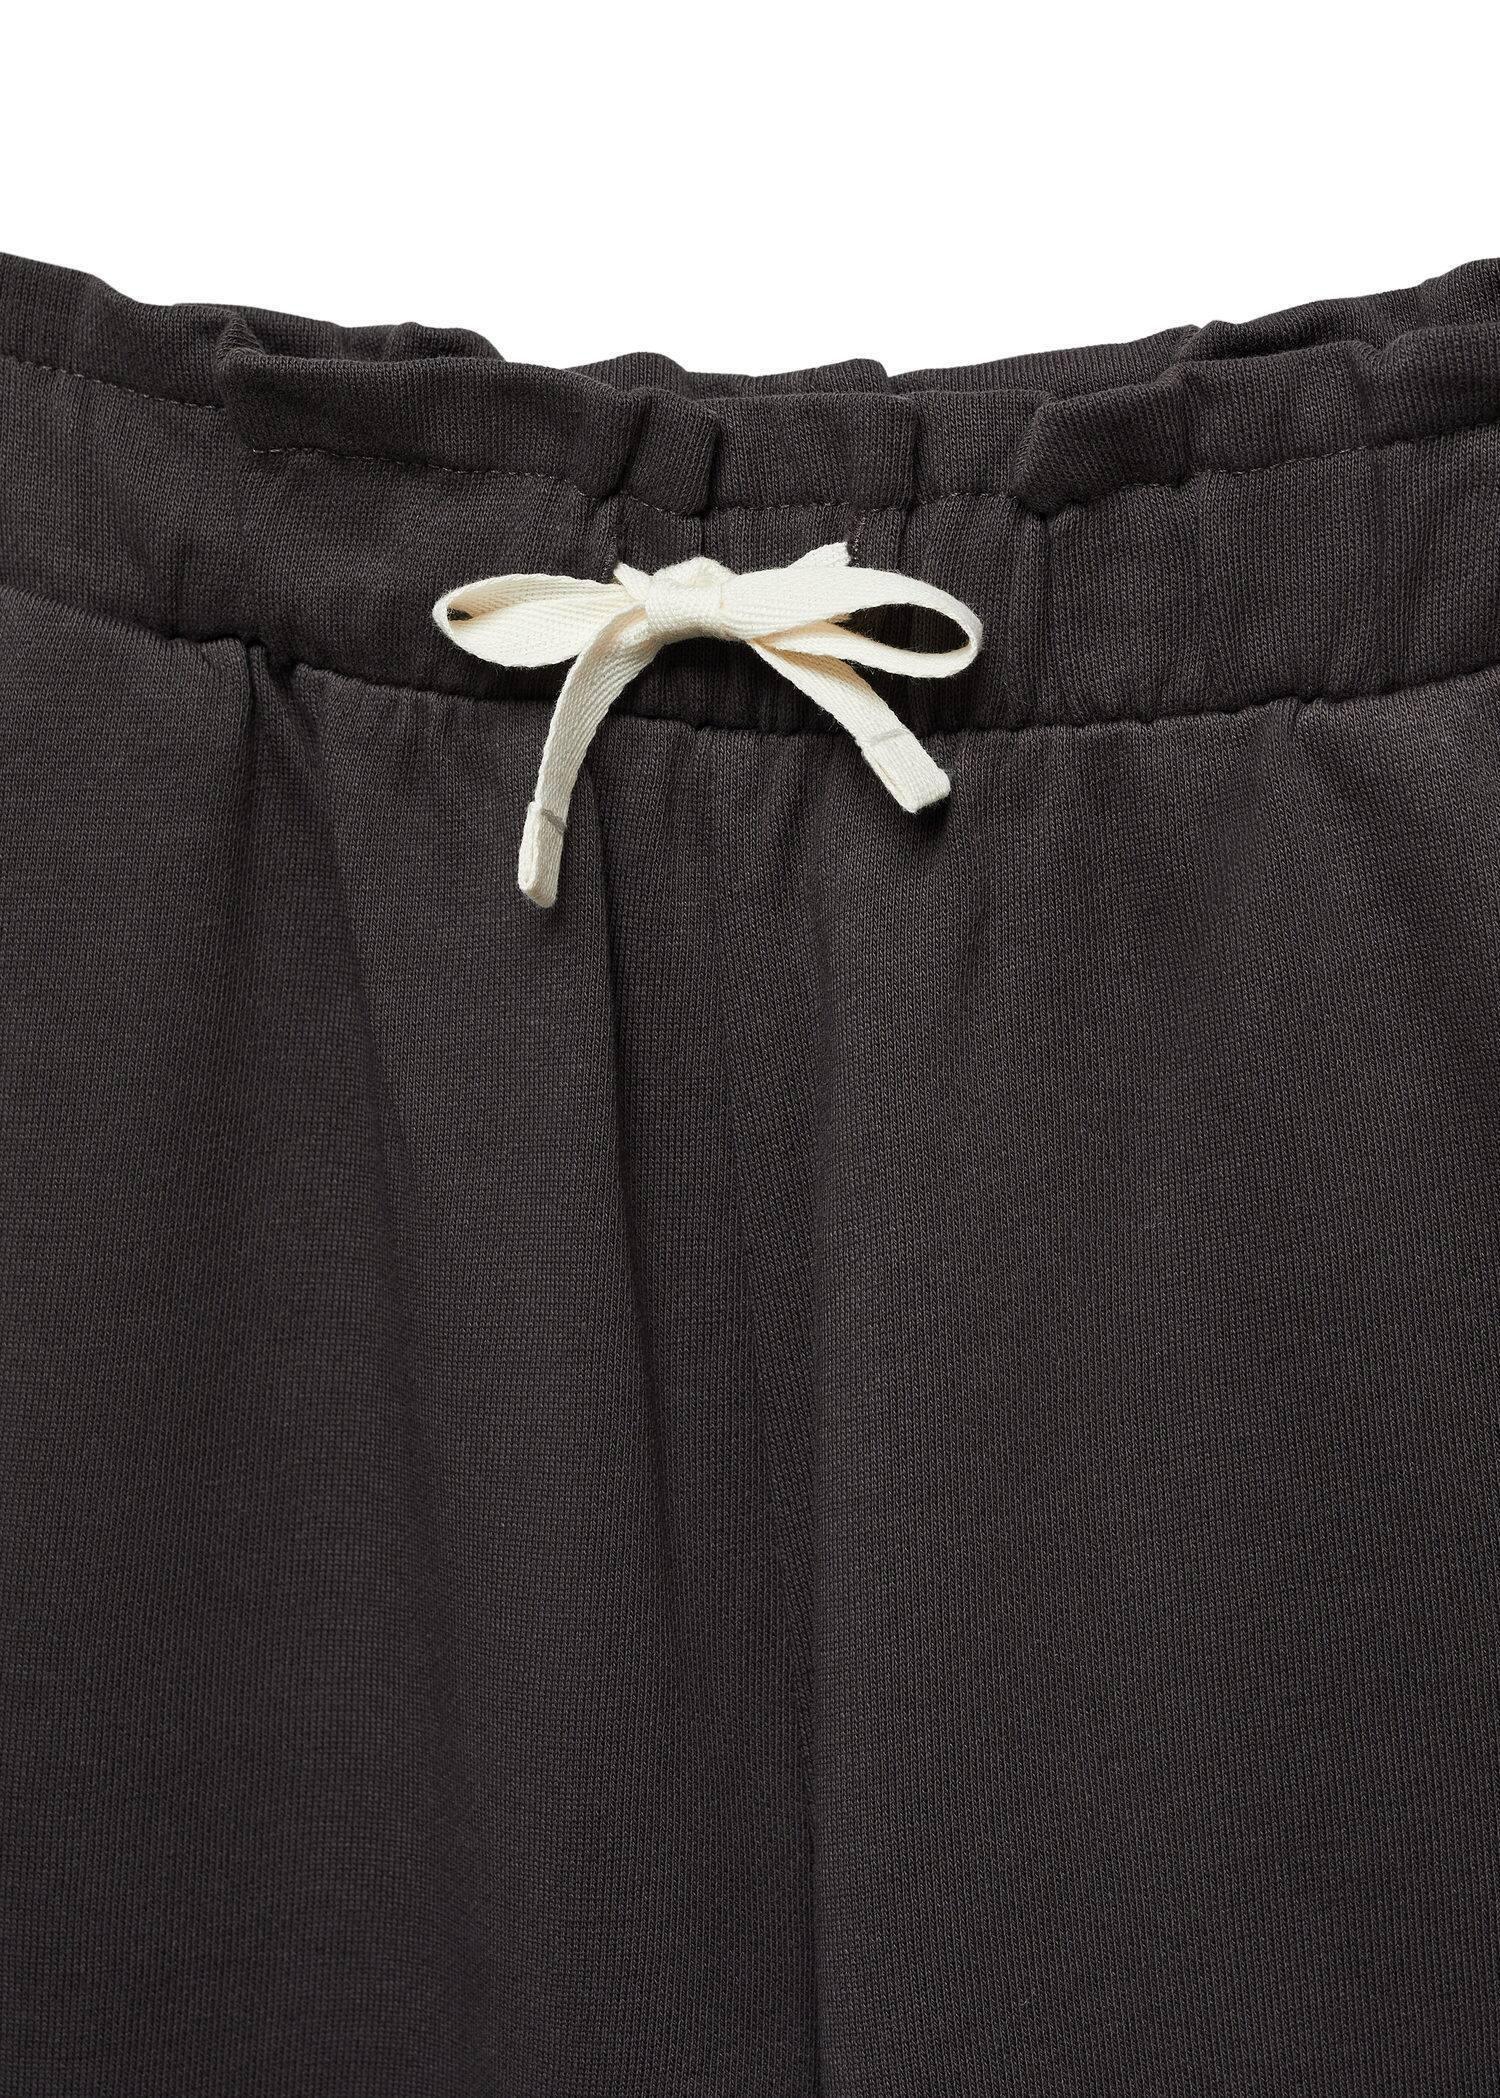 Mango - Grey Cotton Culotte Trousers, Kids Girls